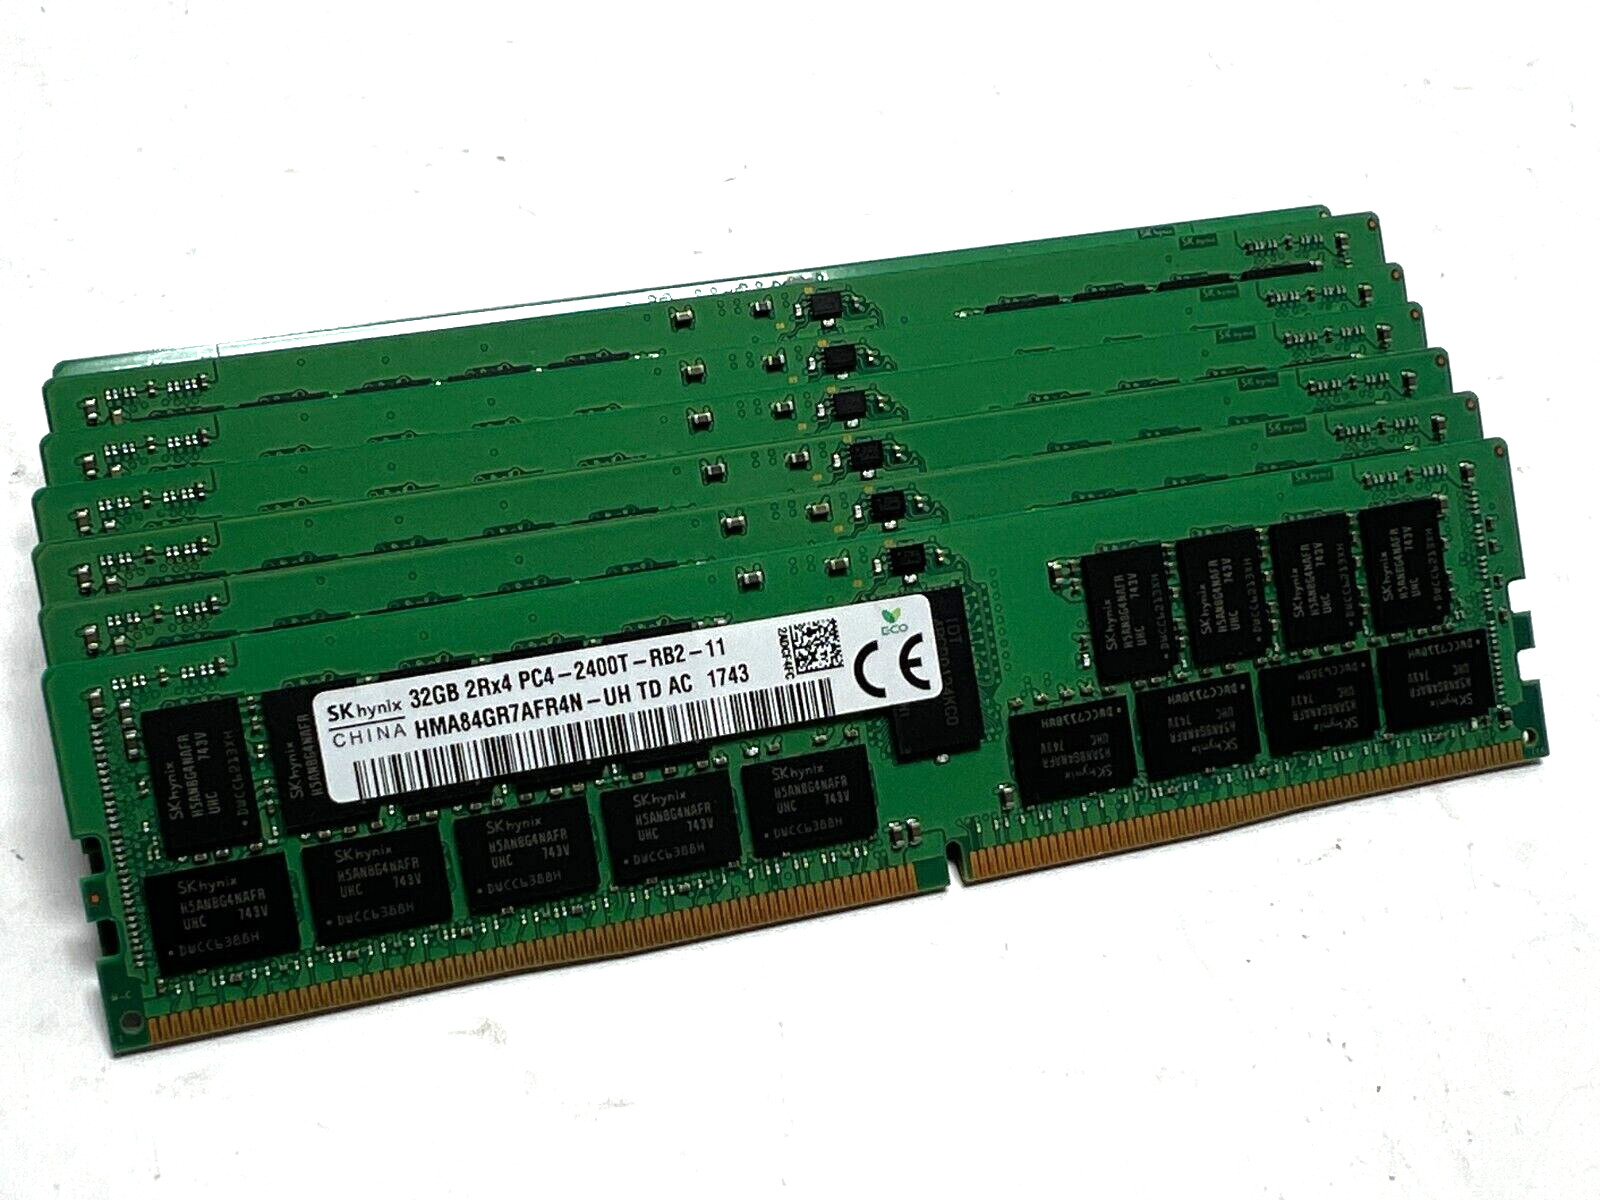 Lot of 8x SK Hynix 32GB (256GB) 2Rx4 PC4-2400T-RB2-11 HMA84GR7AFR4N-UH Dell RAM